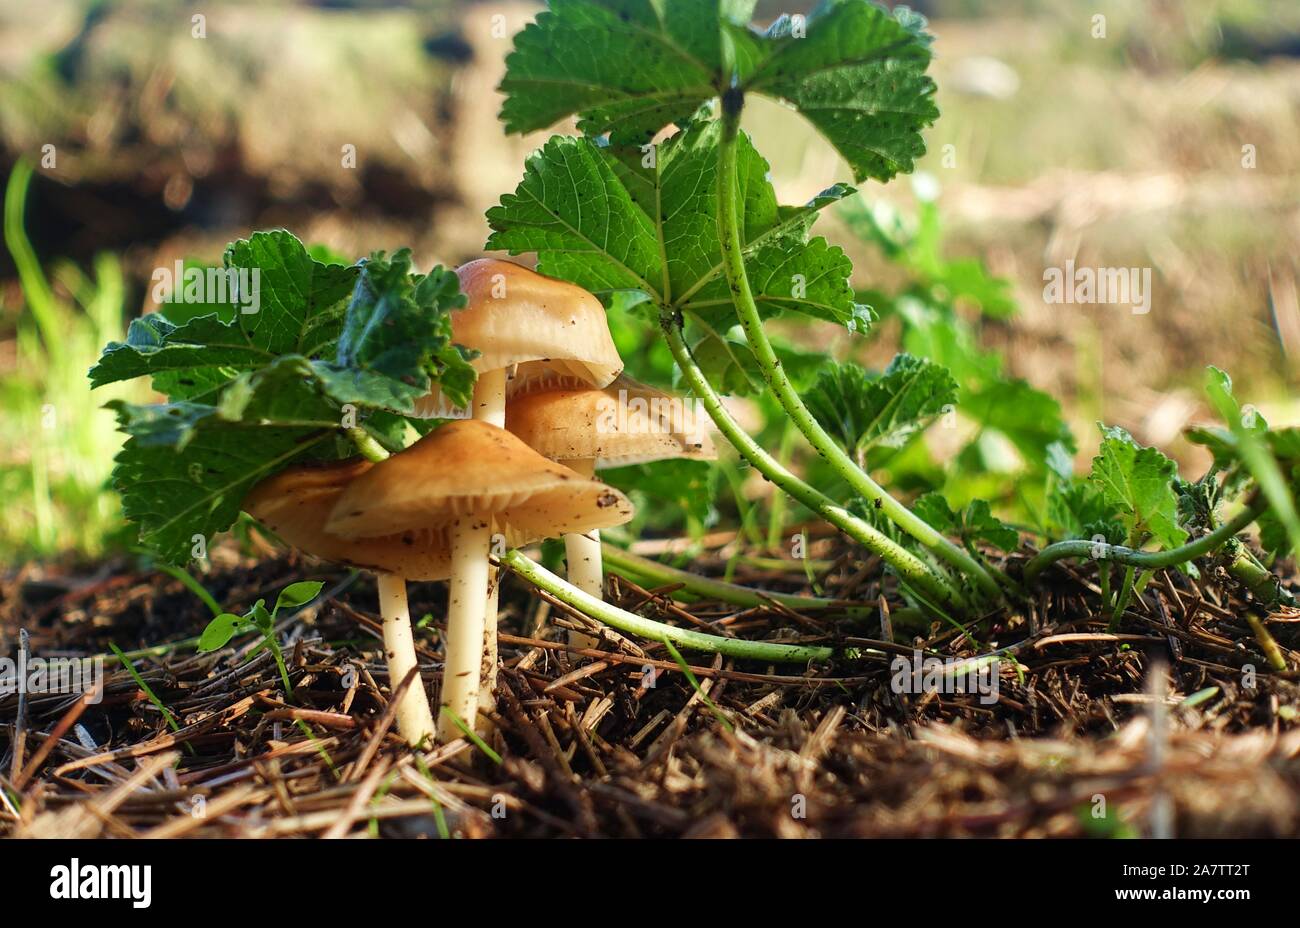 Marasmius oreades. Scotch bonnet. Fairy ring mushroom Stock Photo